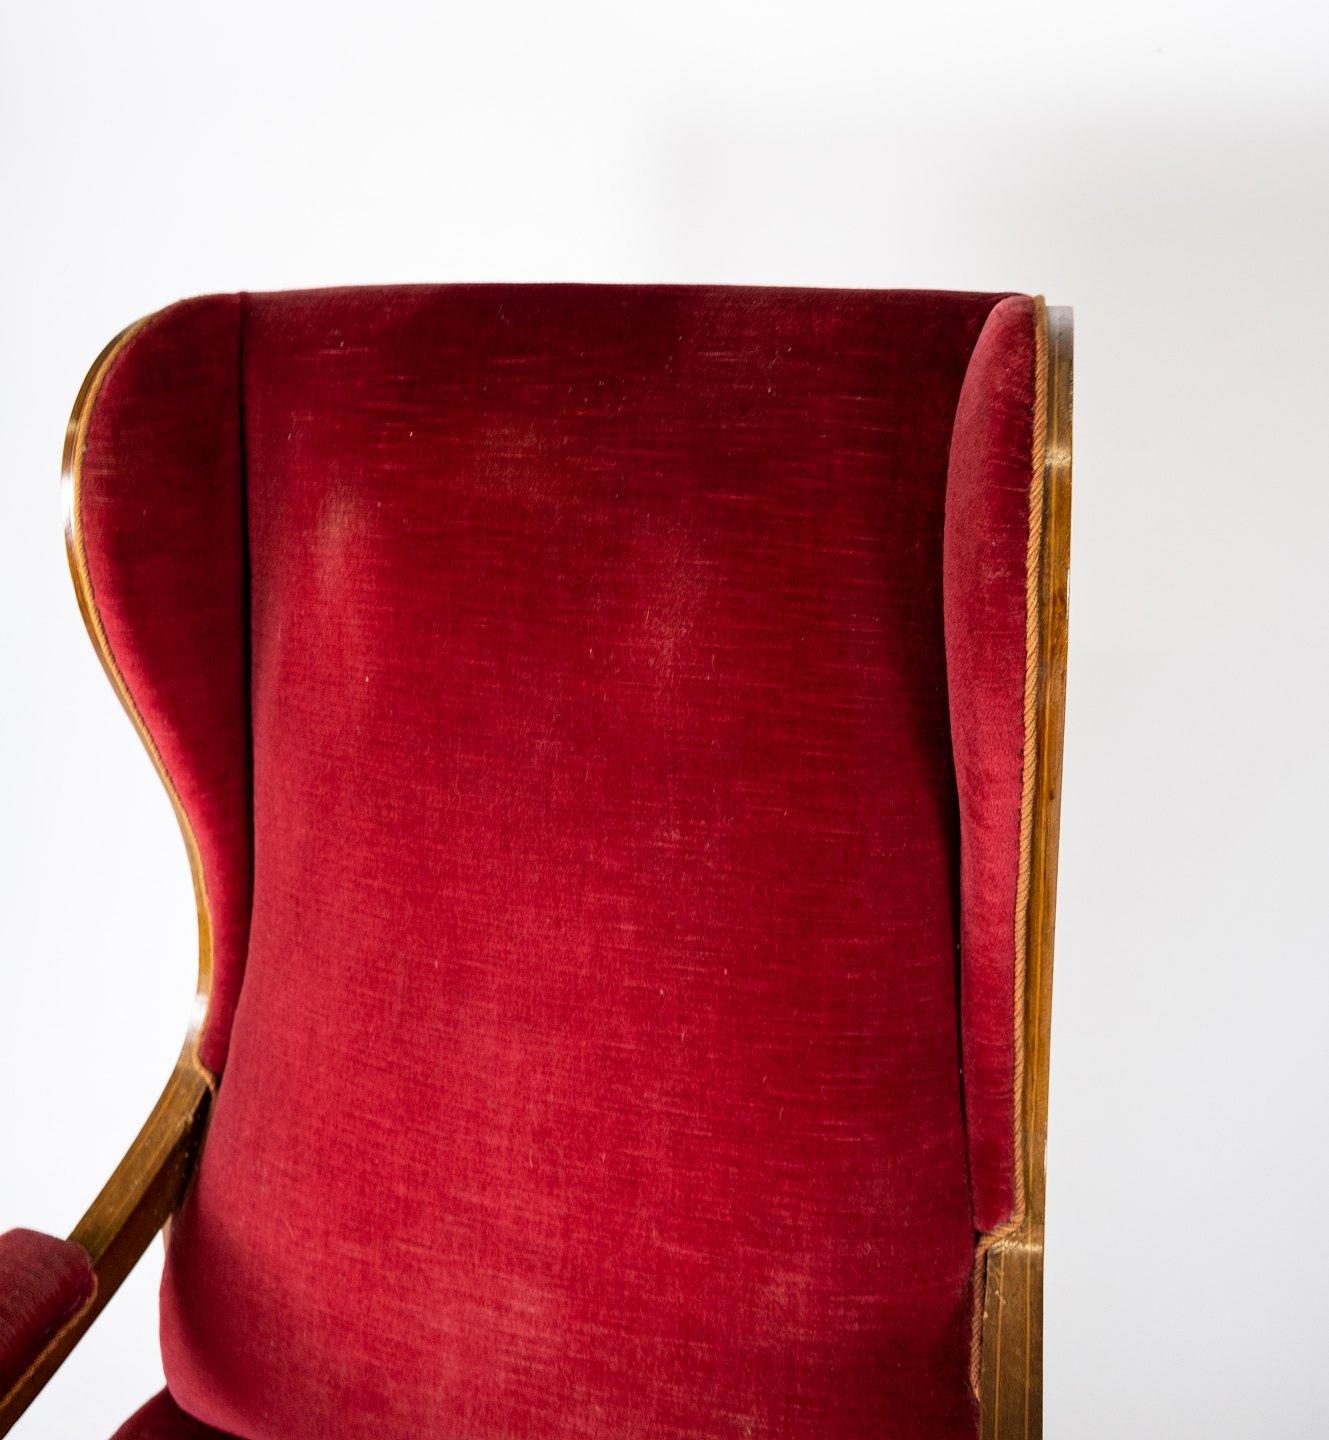 Scandinavian Modern Armchair Made In Red Velvet & Mahogany Designed By Frits Henningsen From 1940s For Sale